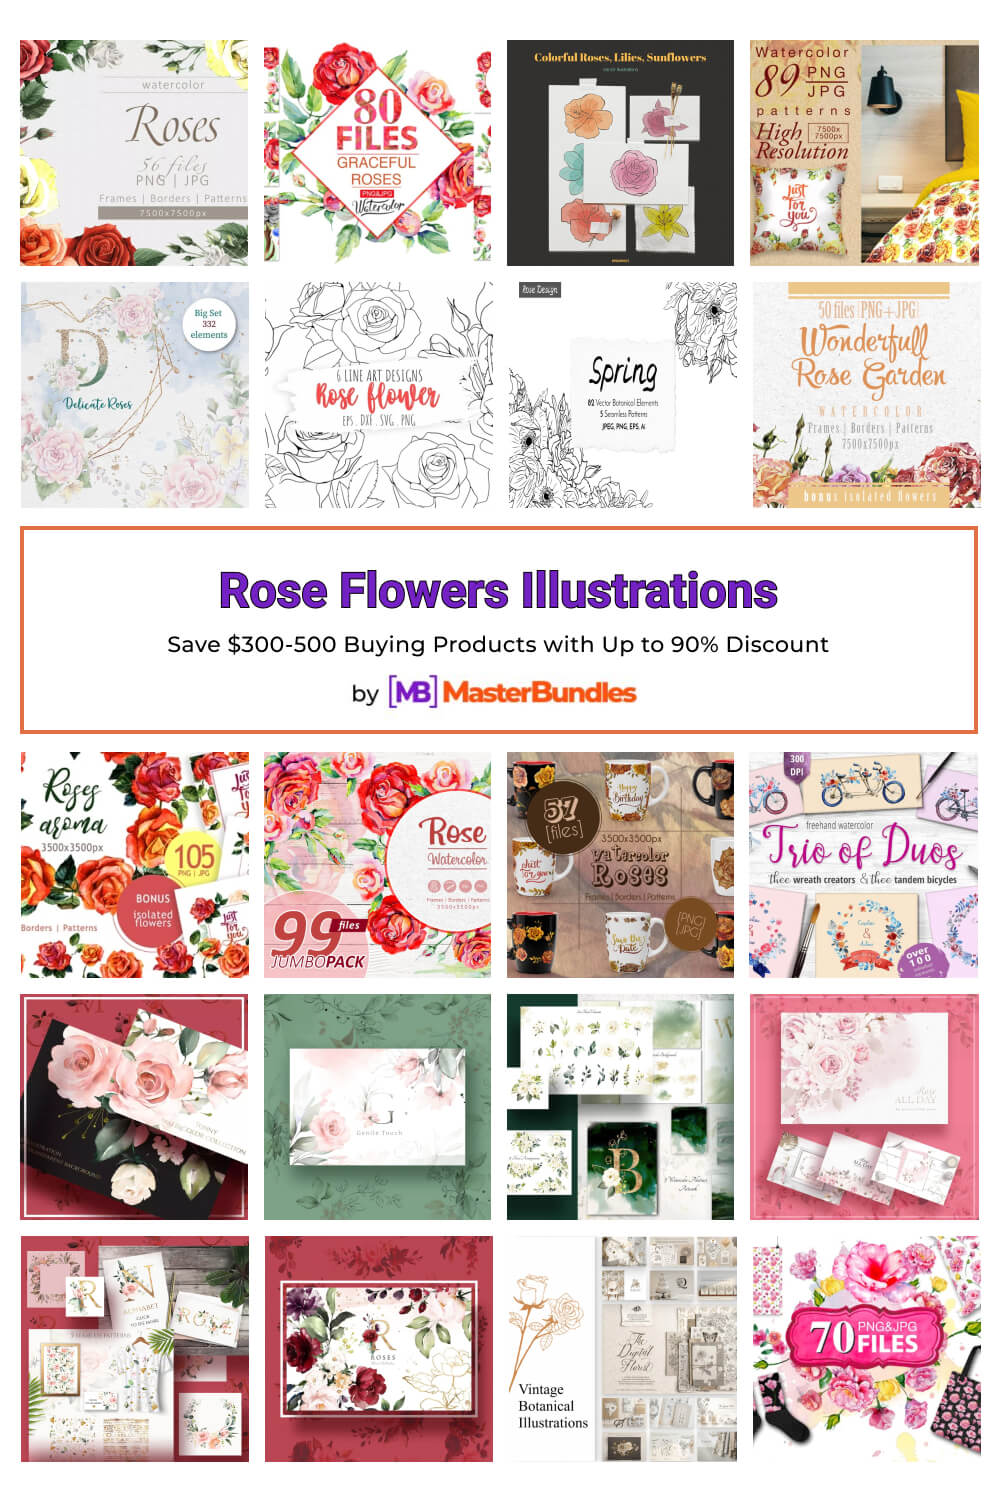 rose flowers illustrations pinterest image.